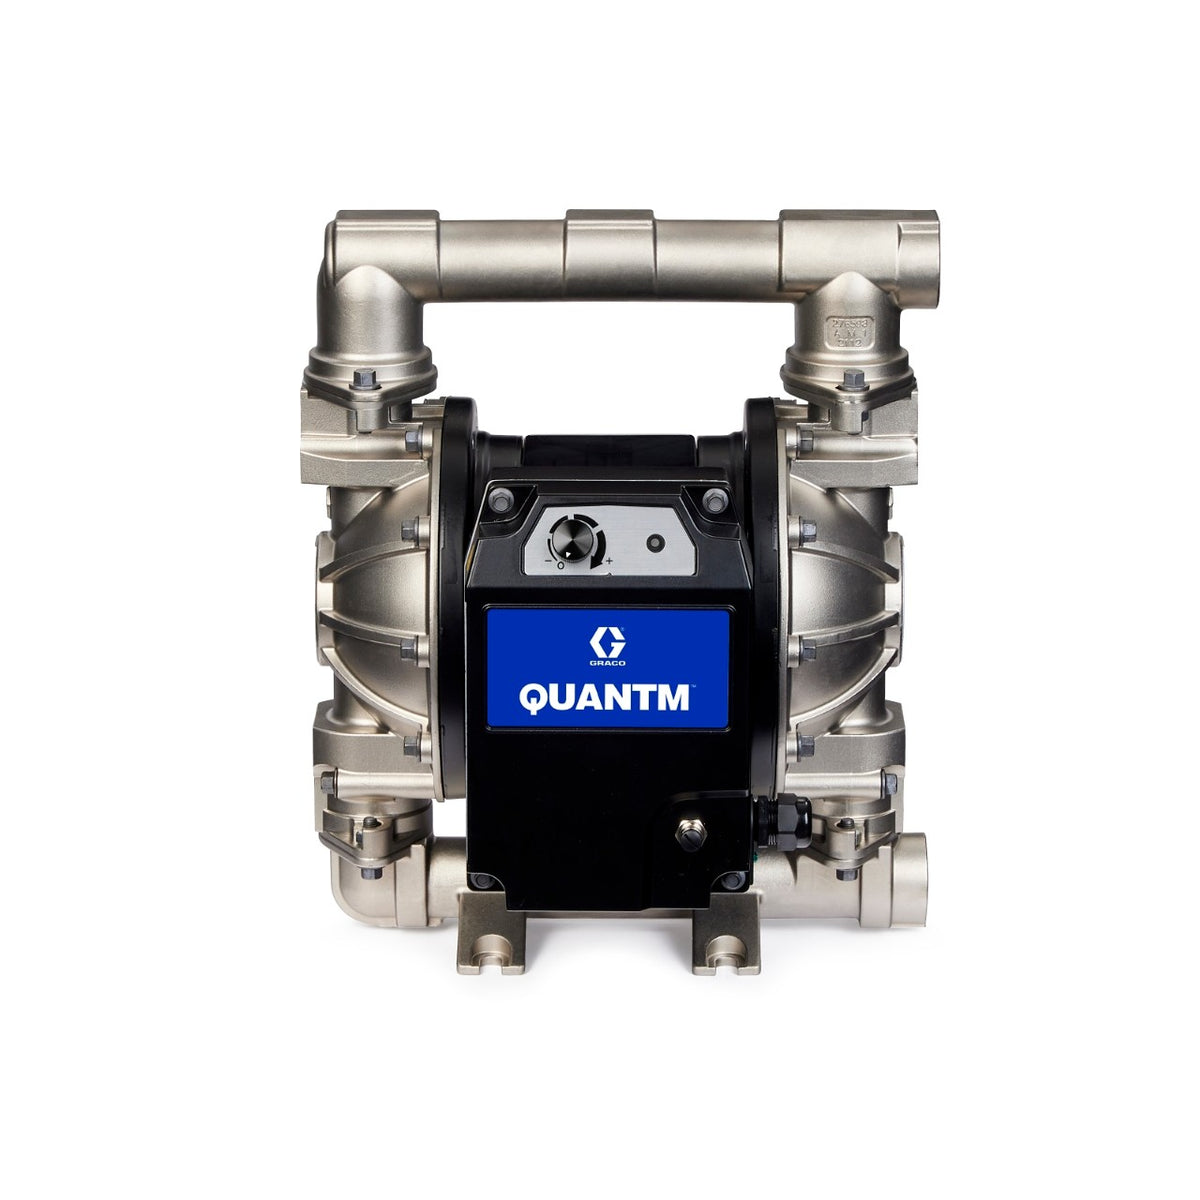 TE80-0031 - QUANTM i80: Stainless Steel Electric Diaphragm Pump